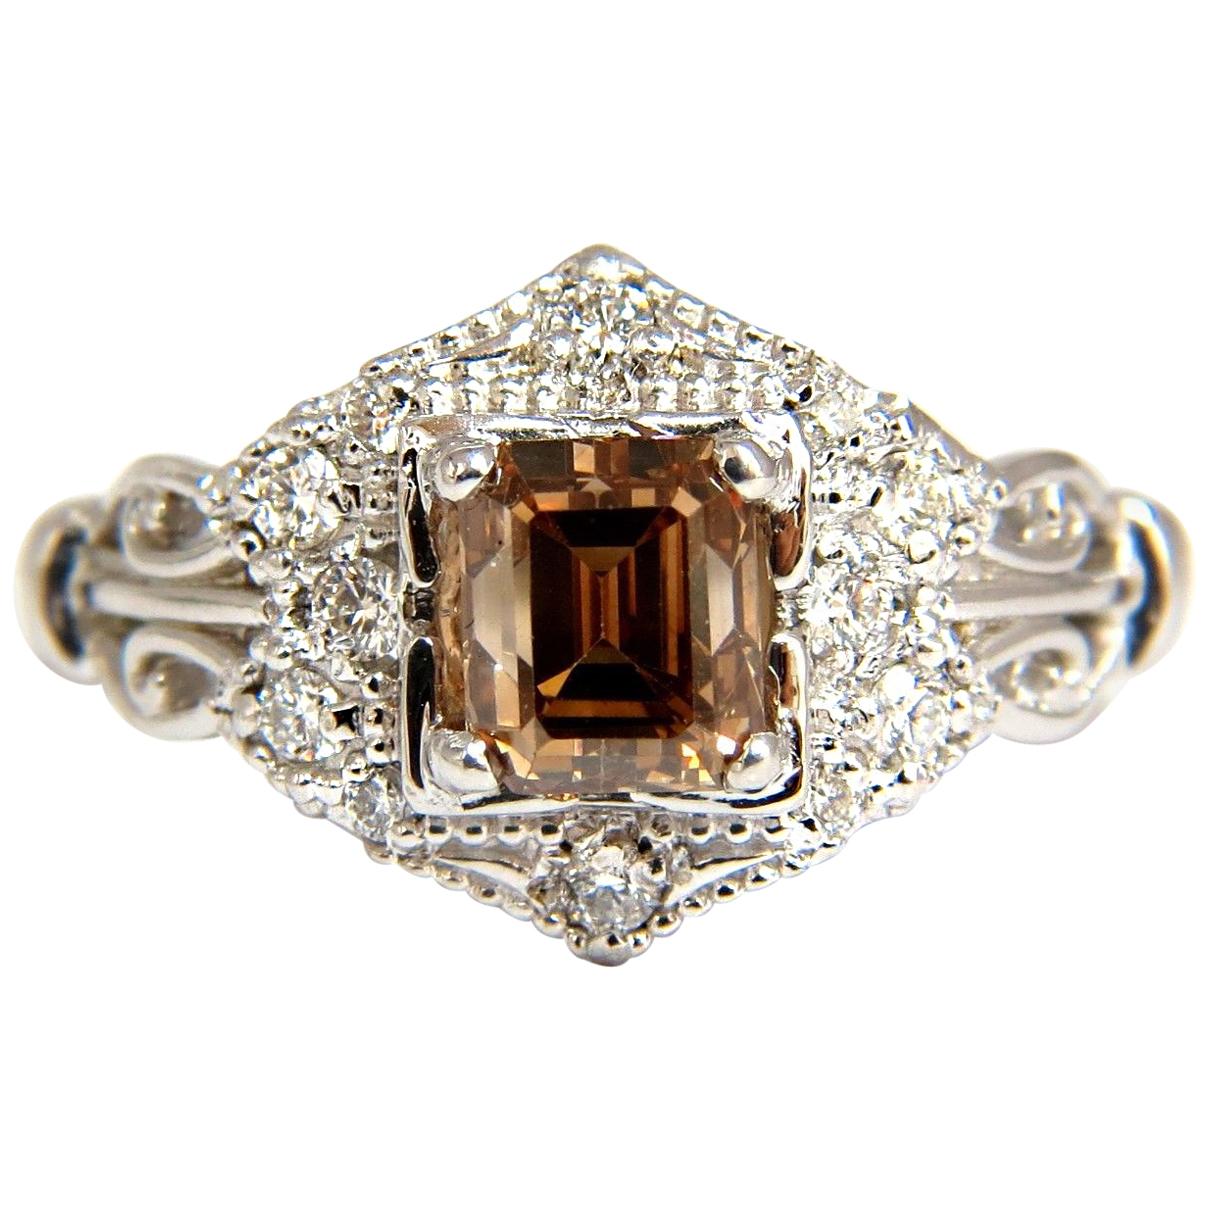 1.39 Carat Natural Fancy Brown Emerald Cut Diamond Ring VS2 Victorian Deco